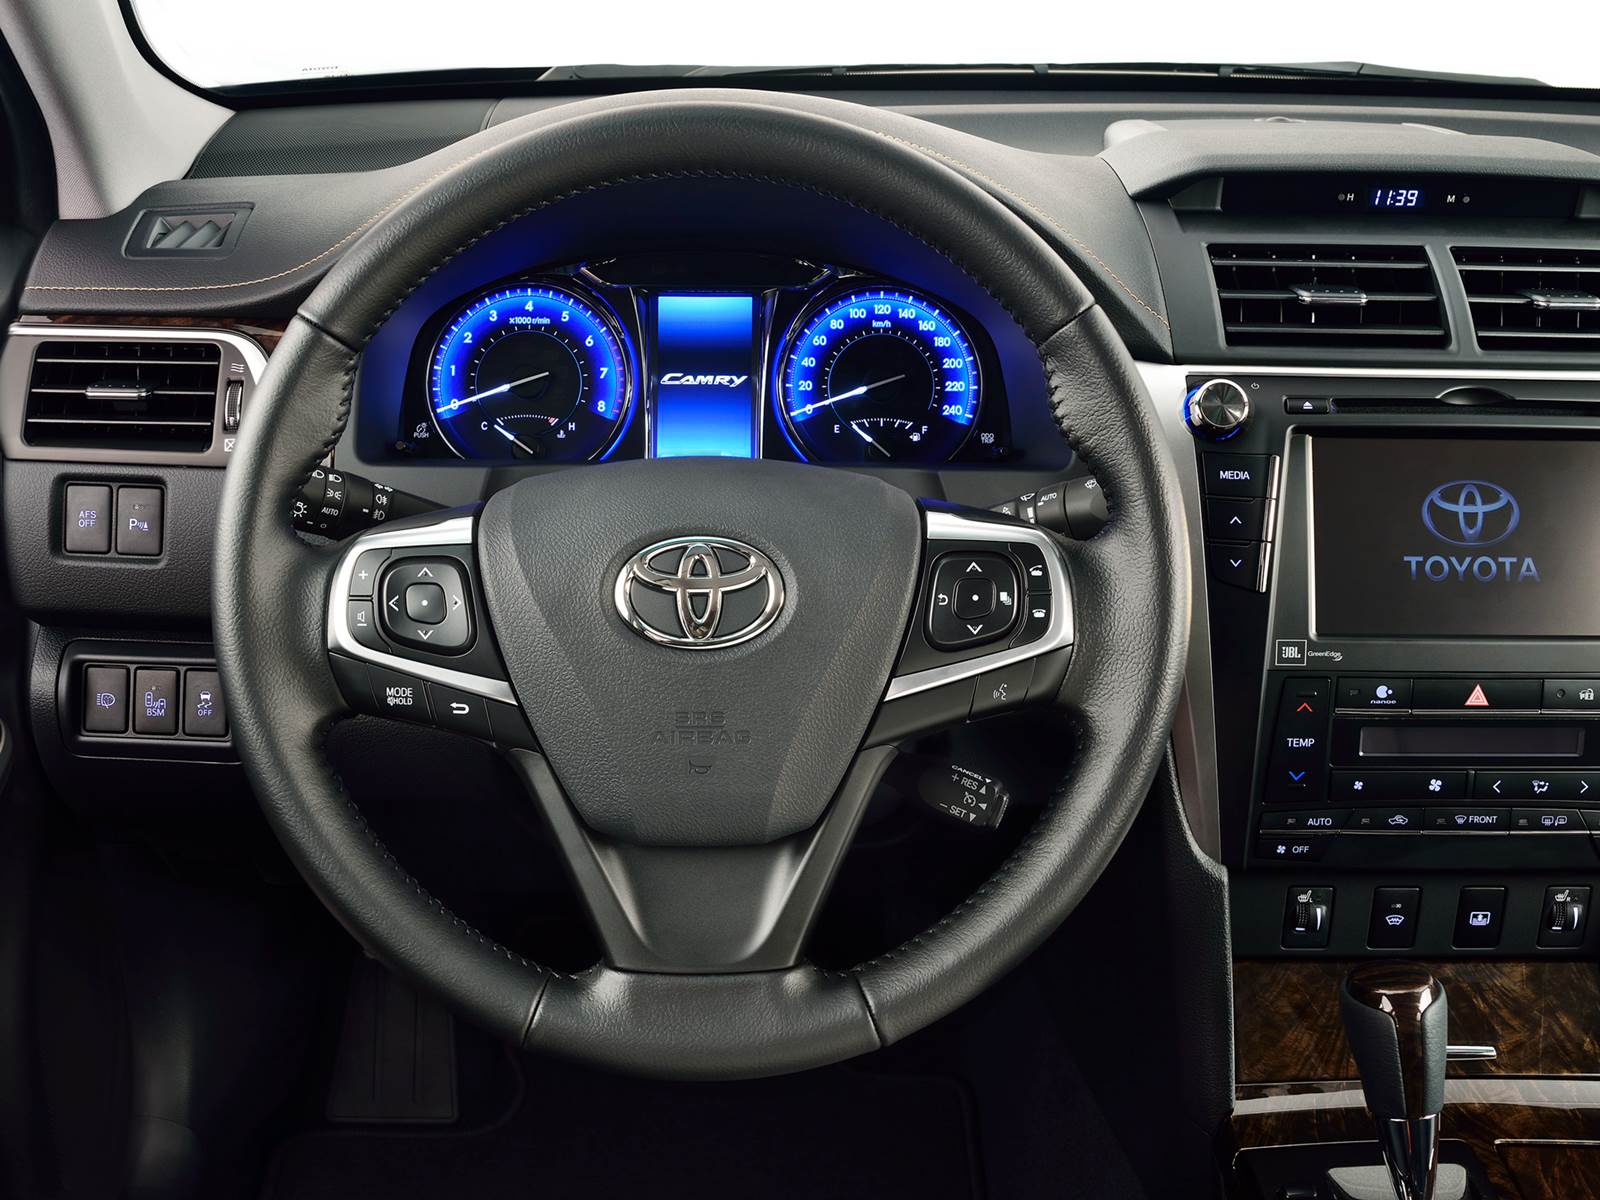 Toyota Camry 2015 - interior - painel